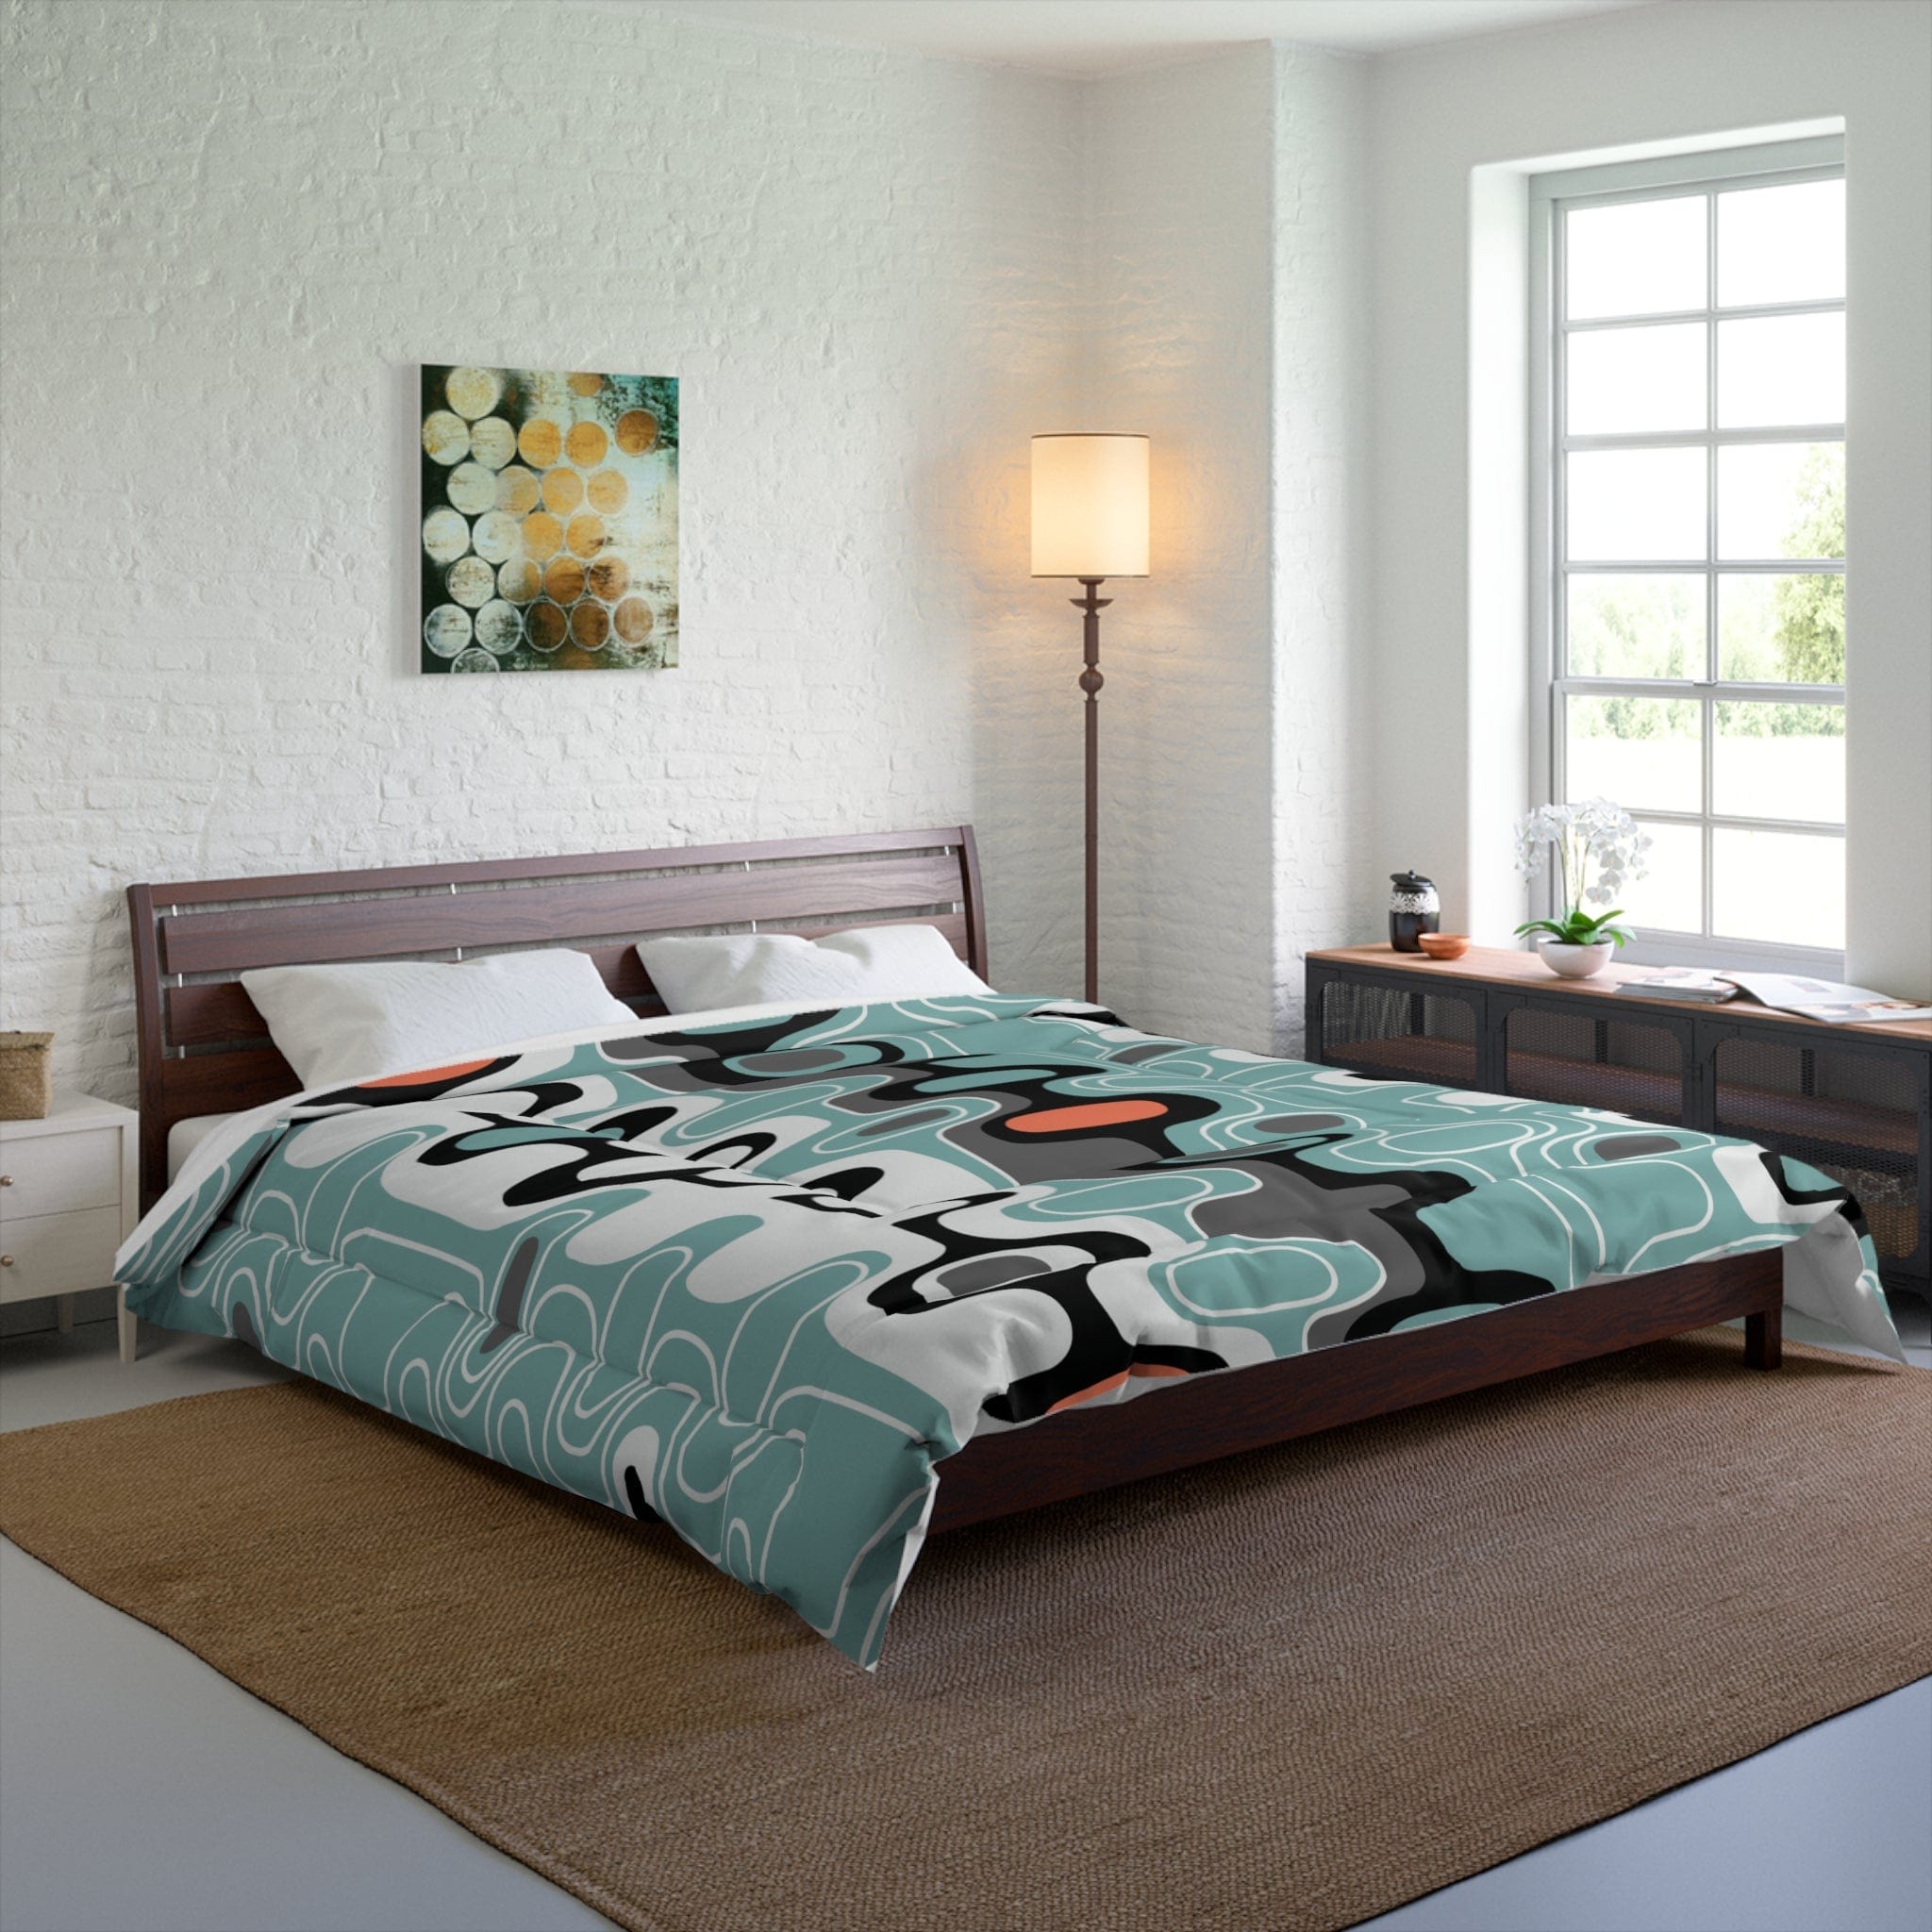 Kate McEnroe New York Retro Geometric Abstract Mid Century Modern Comforter Comforters 104&quot; × 88&quot; 18770635388039353903